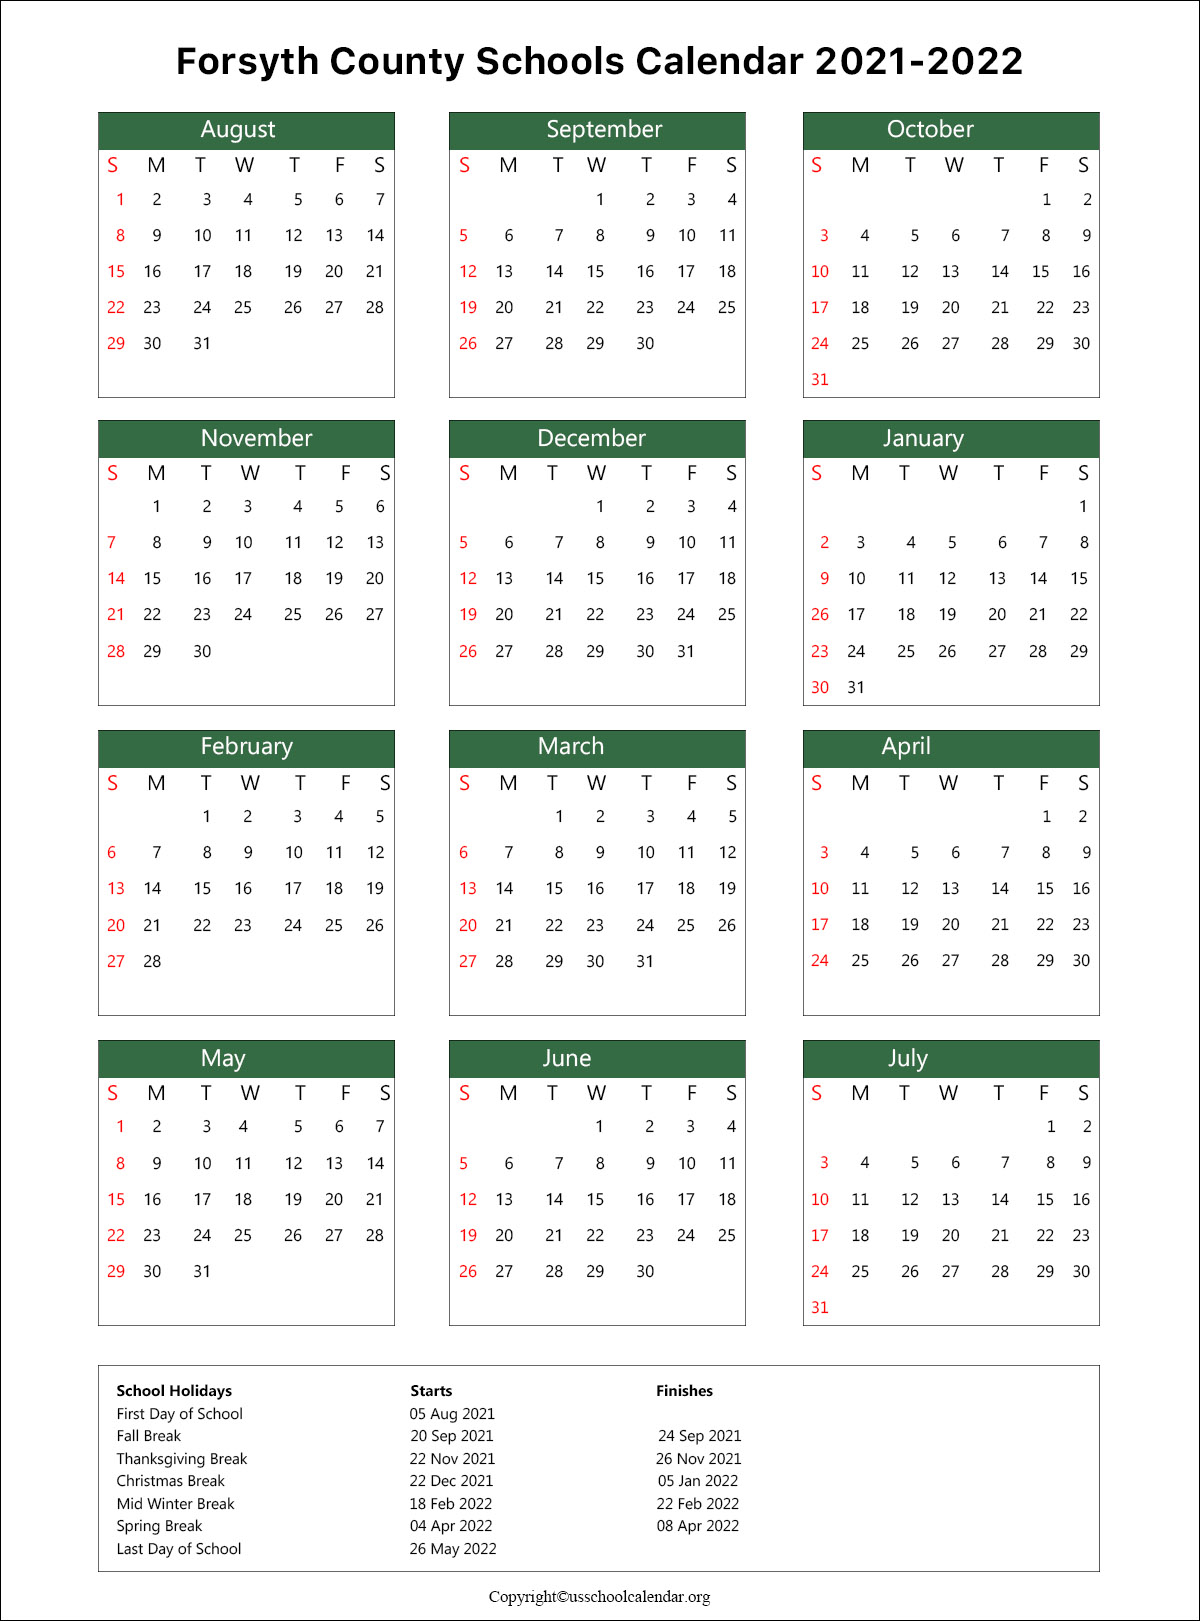 Forsyth County School Calendar with Holidays 20212022